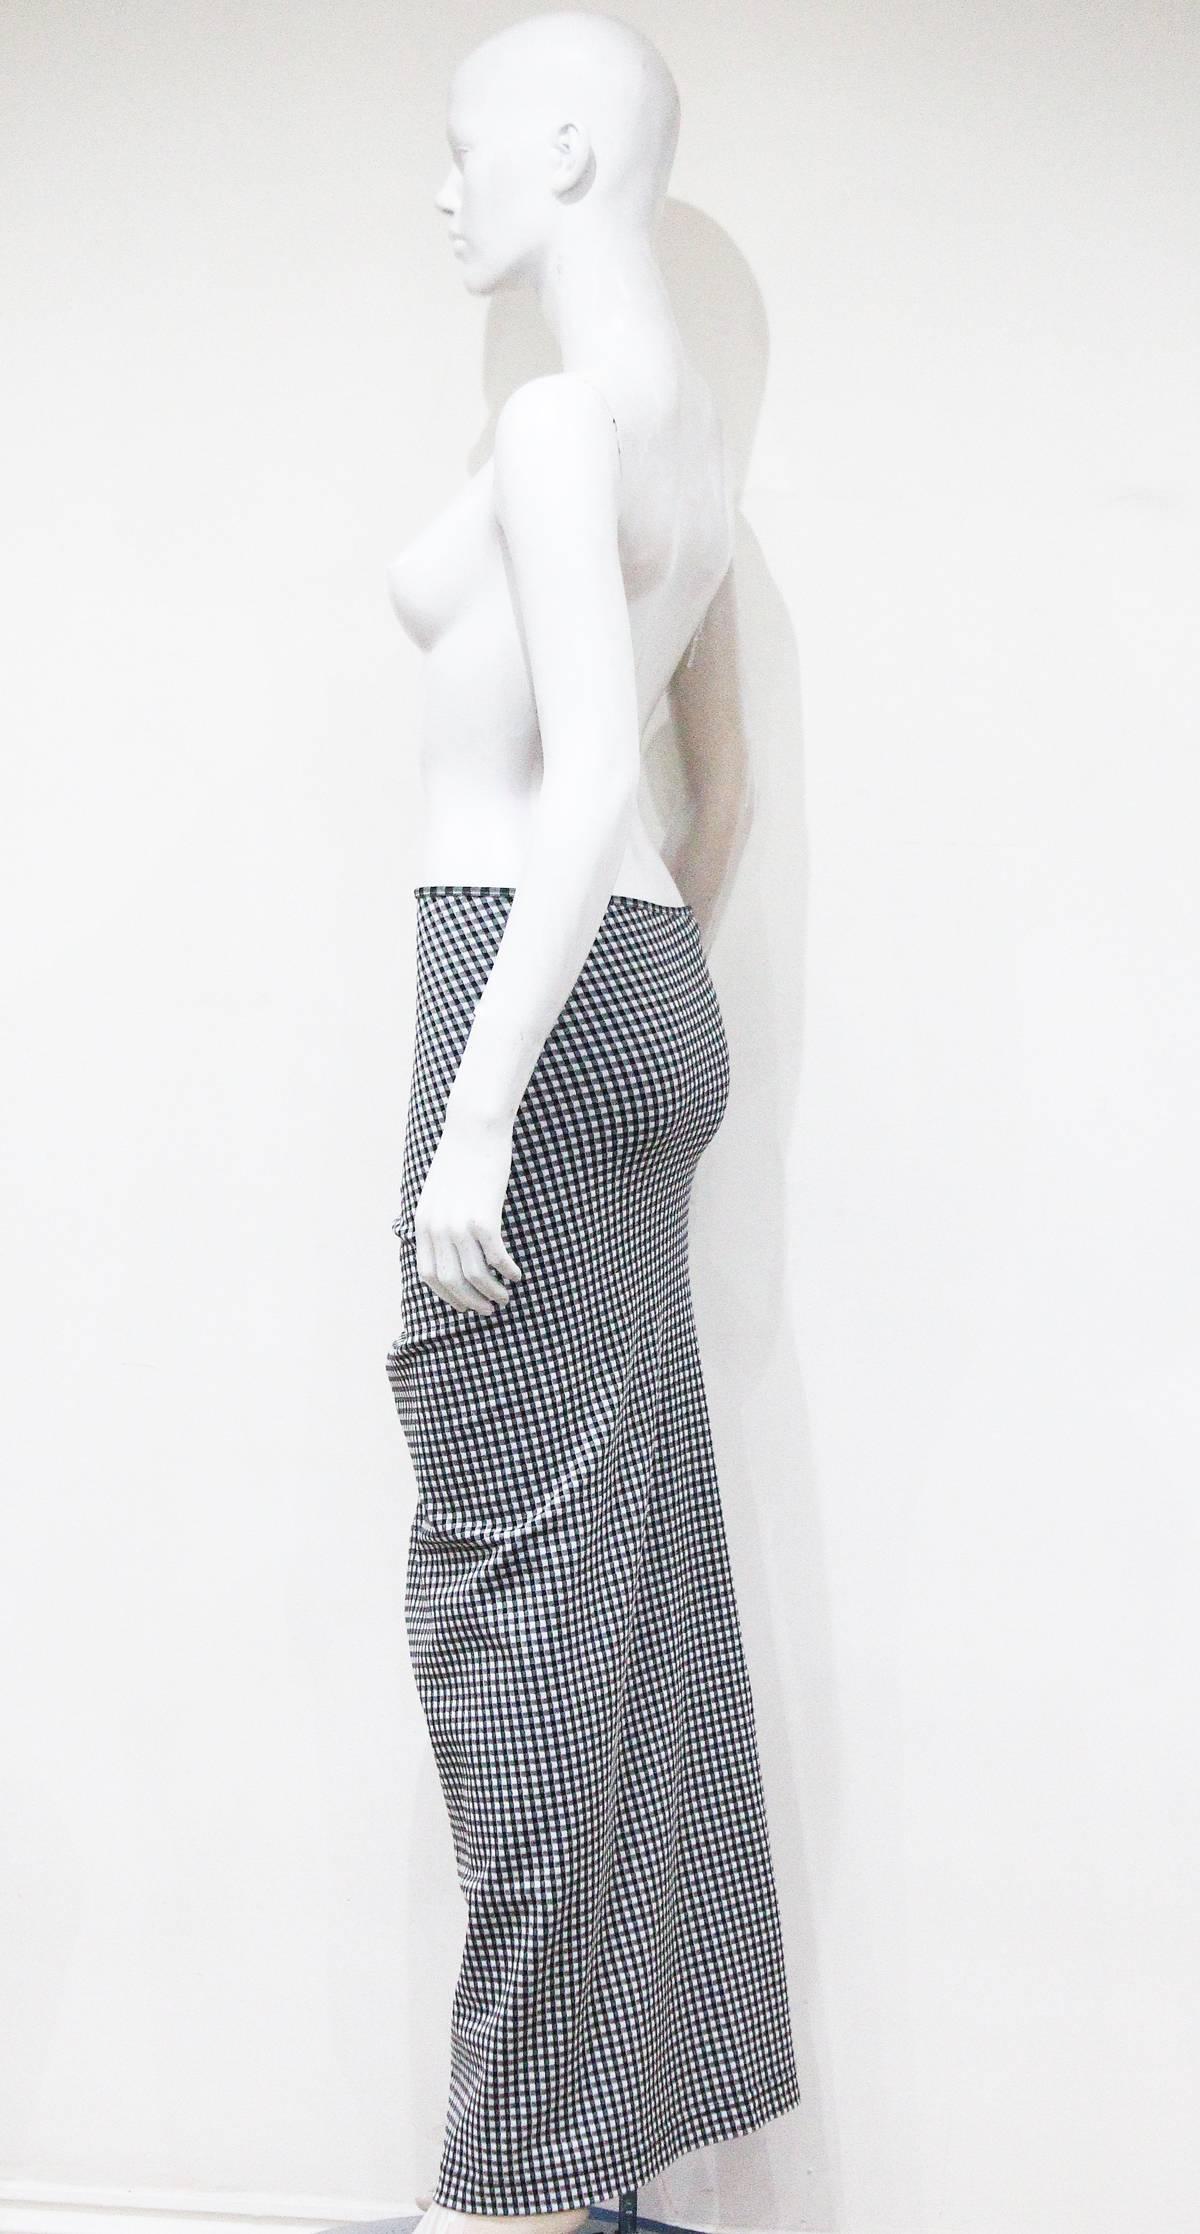 Women's Comme des Garcons 'Body Meets Dress' / 'Bump' collection gingham skirt, c. 1997